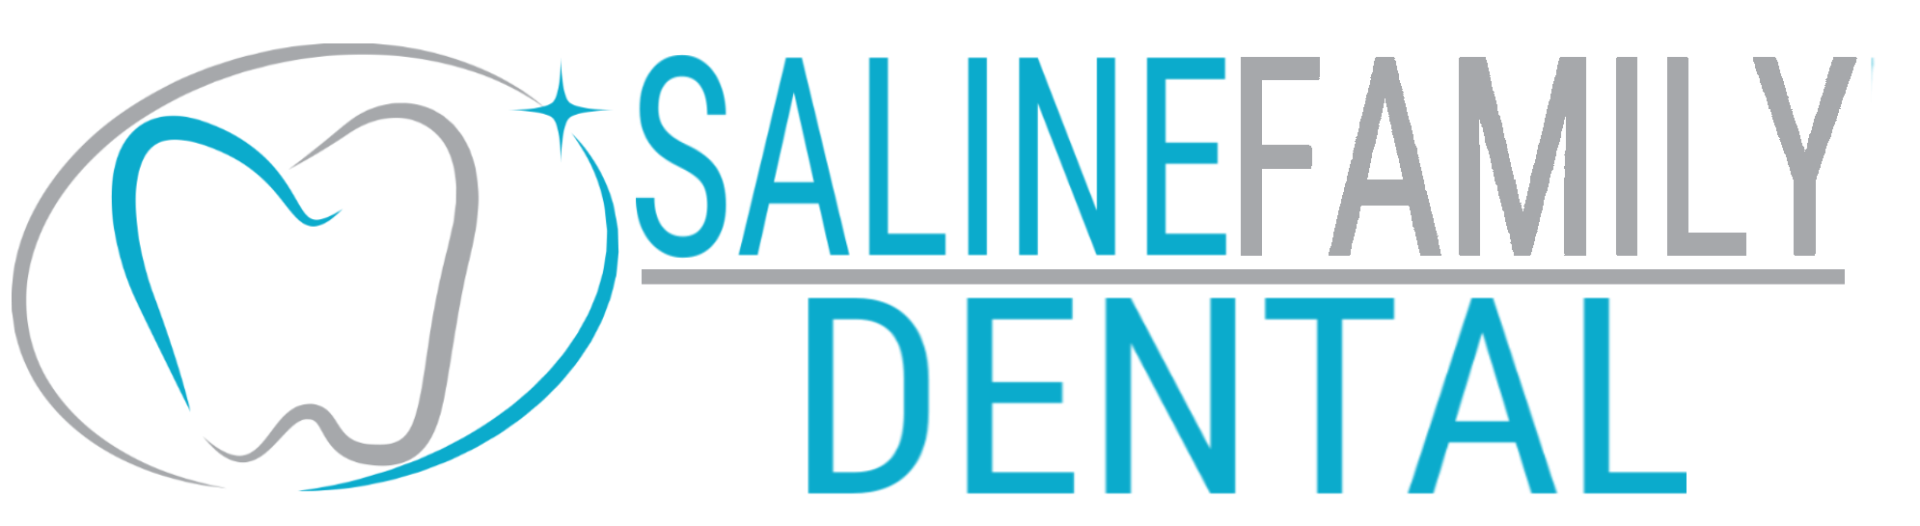 Dr. Ragan | Saline Family Dental | Implant Dentistry